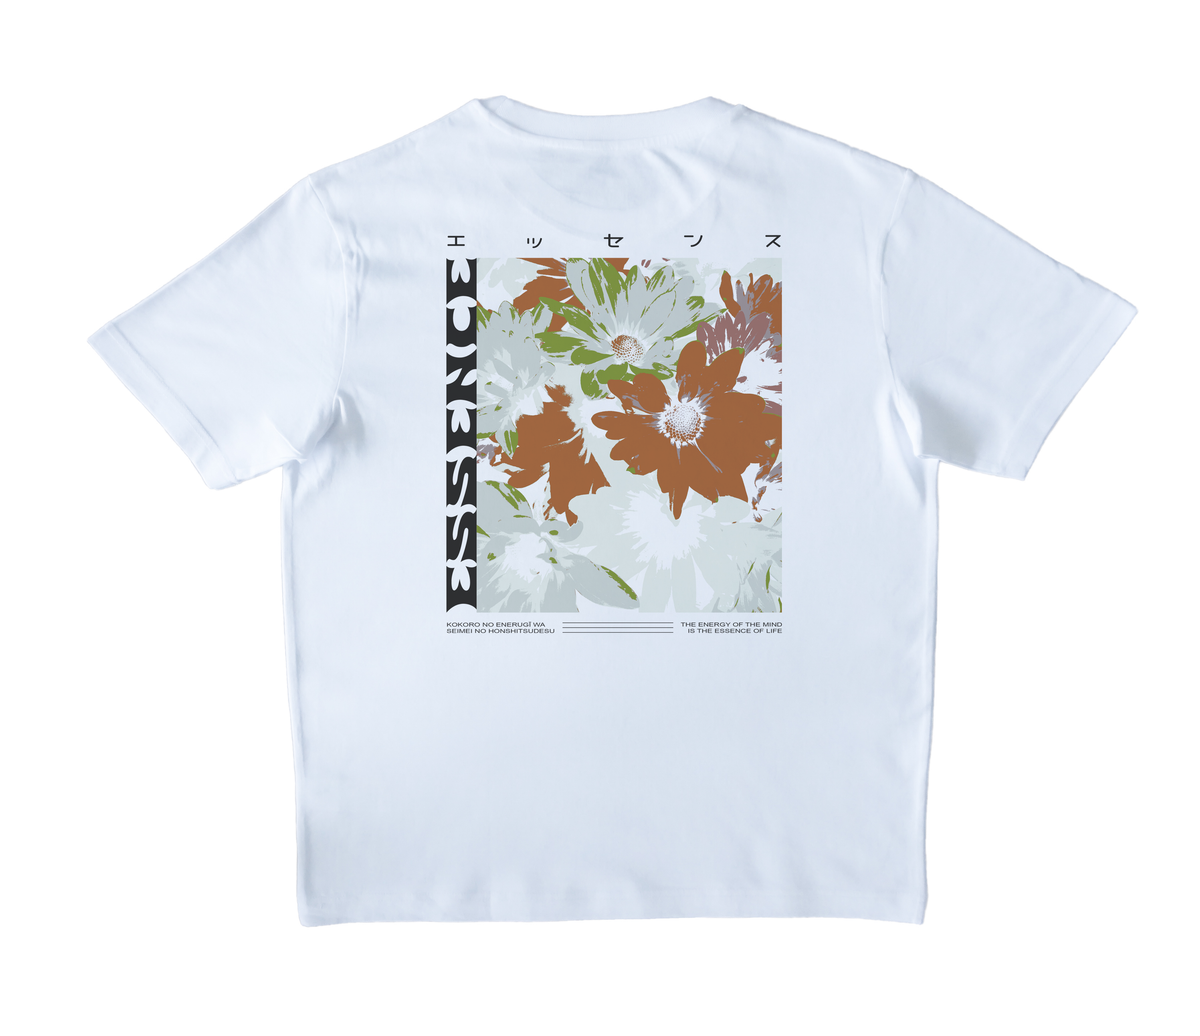 Essence - Unisex Organic Cotton T-Shirt